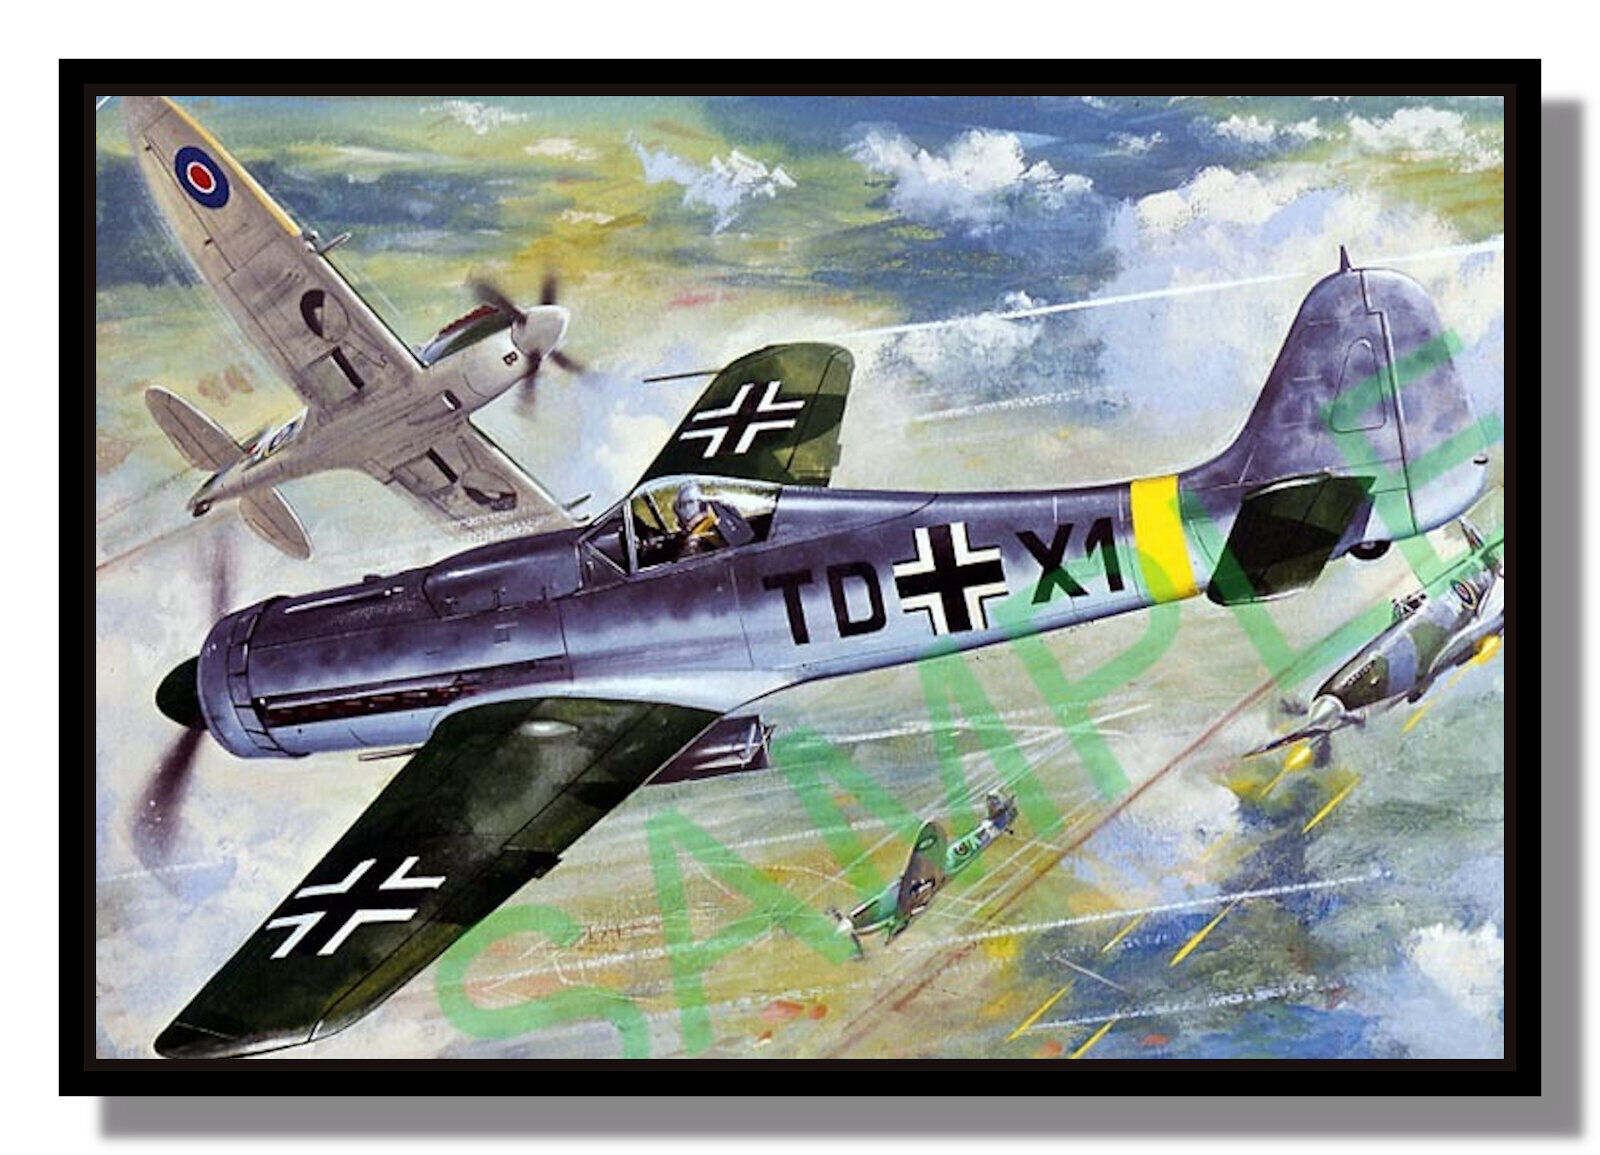 Focke-Wulf Fw 190D and Spitfire dogfight Luftwaffe free p&p UK